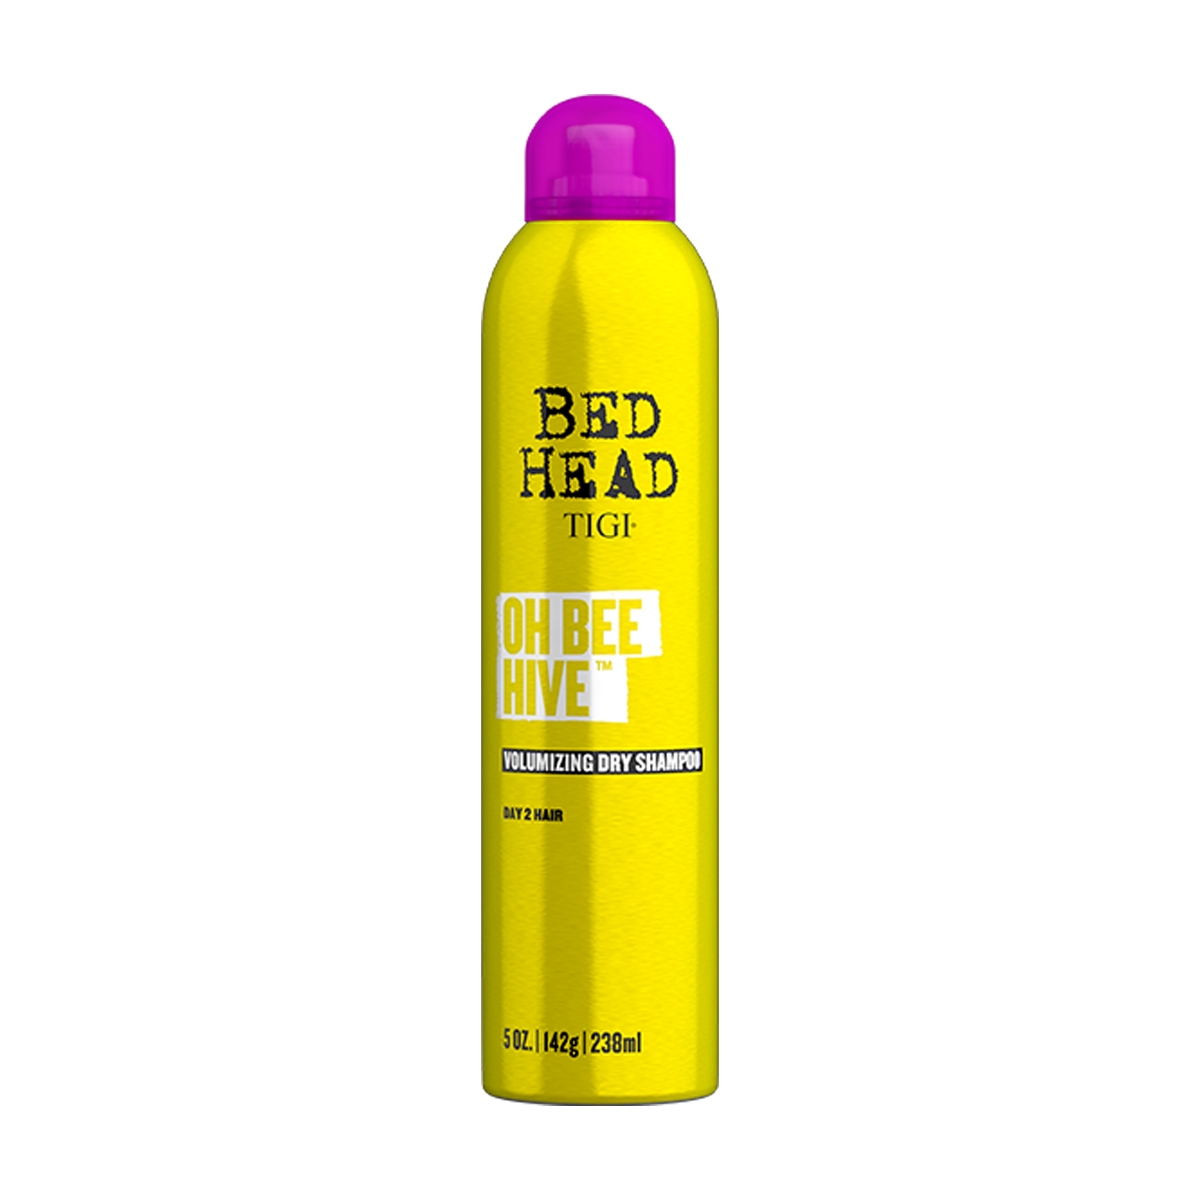 Shampoo a Seco Bed Head Dry Oh Bee Hive 238ml 142g/238ml